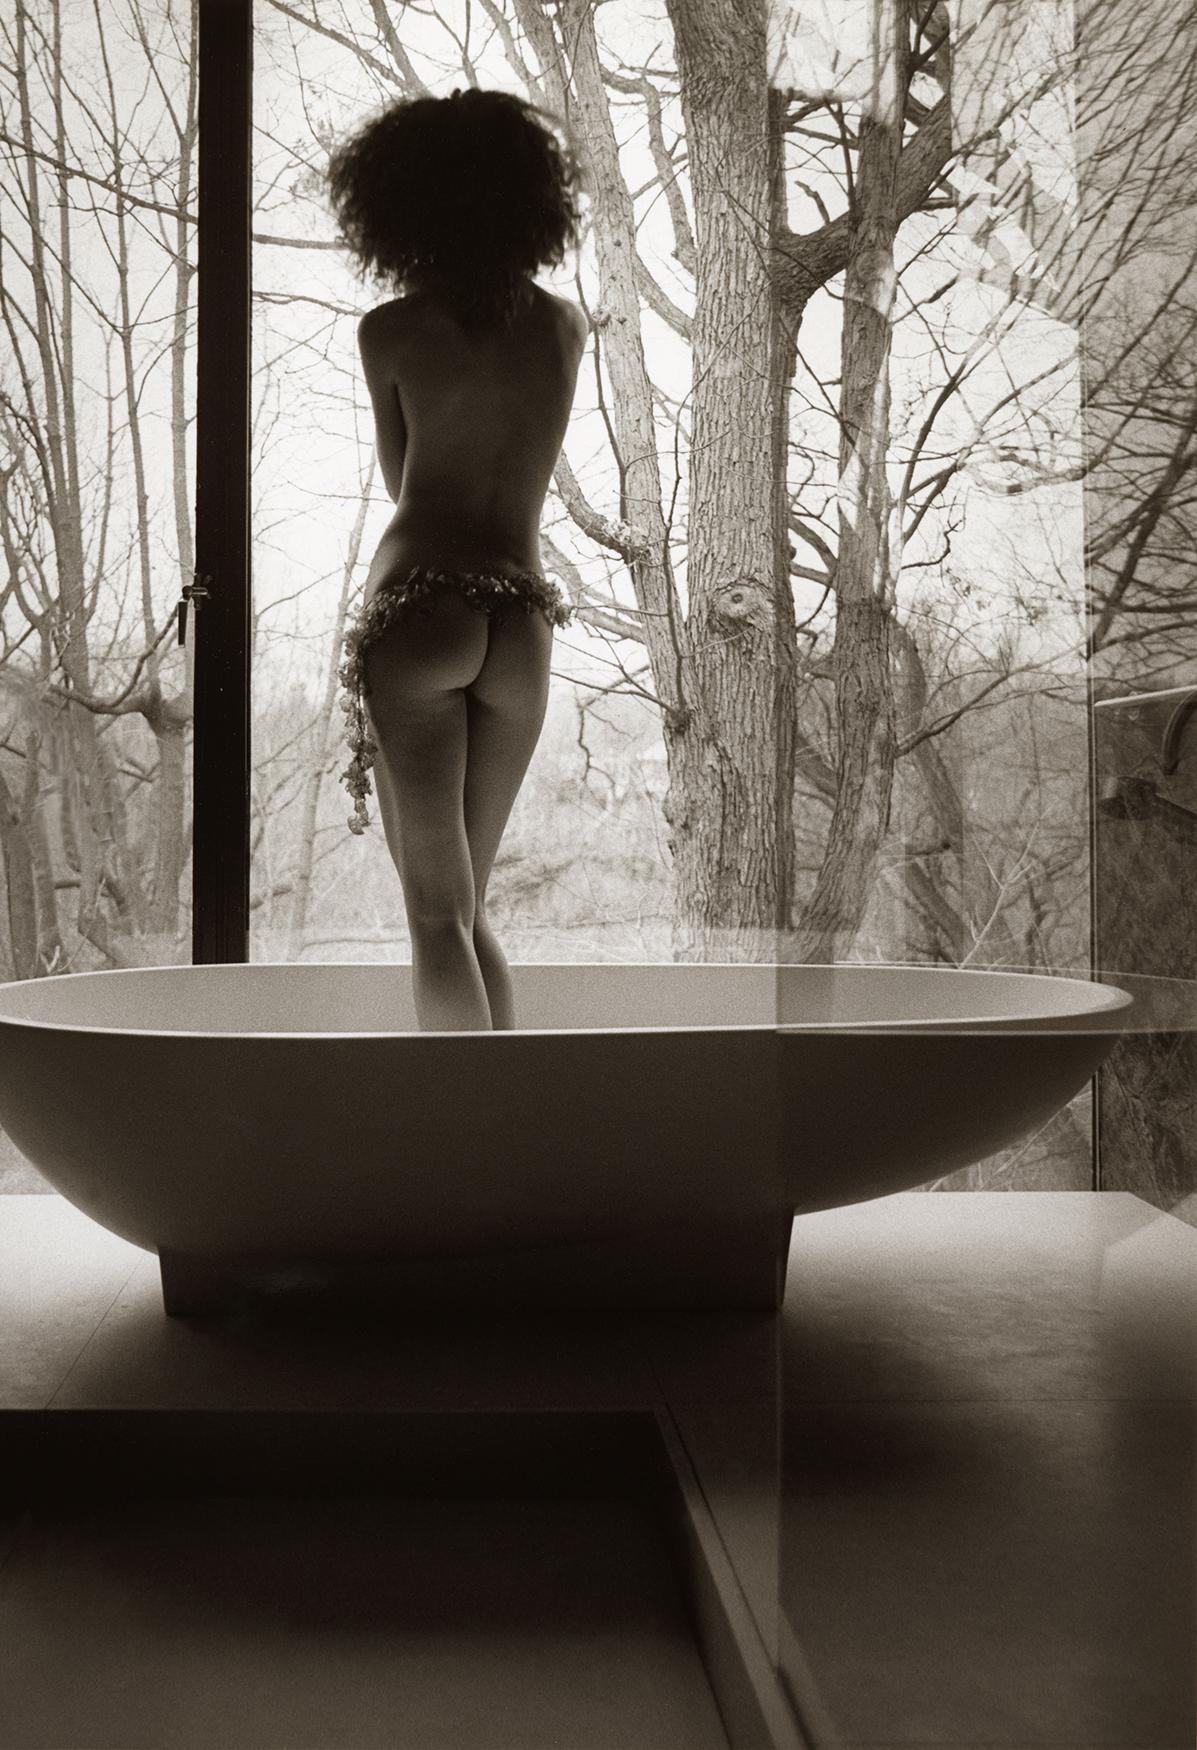 Ron Baxter Smith Nude Photograph – Yabu / Pushelberg Home - B+W Nude in Nub, 2003.